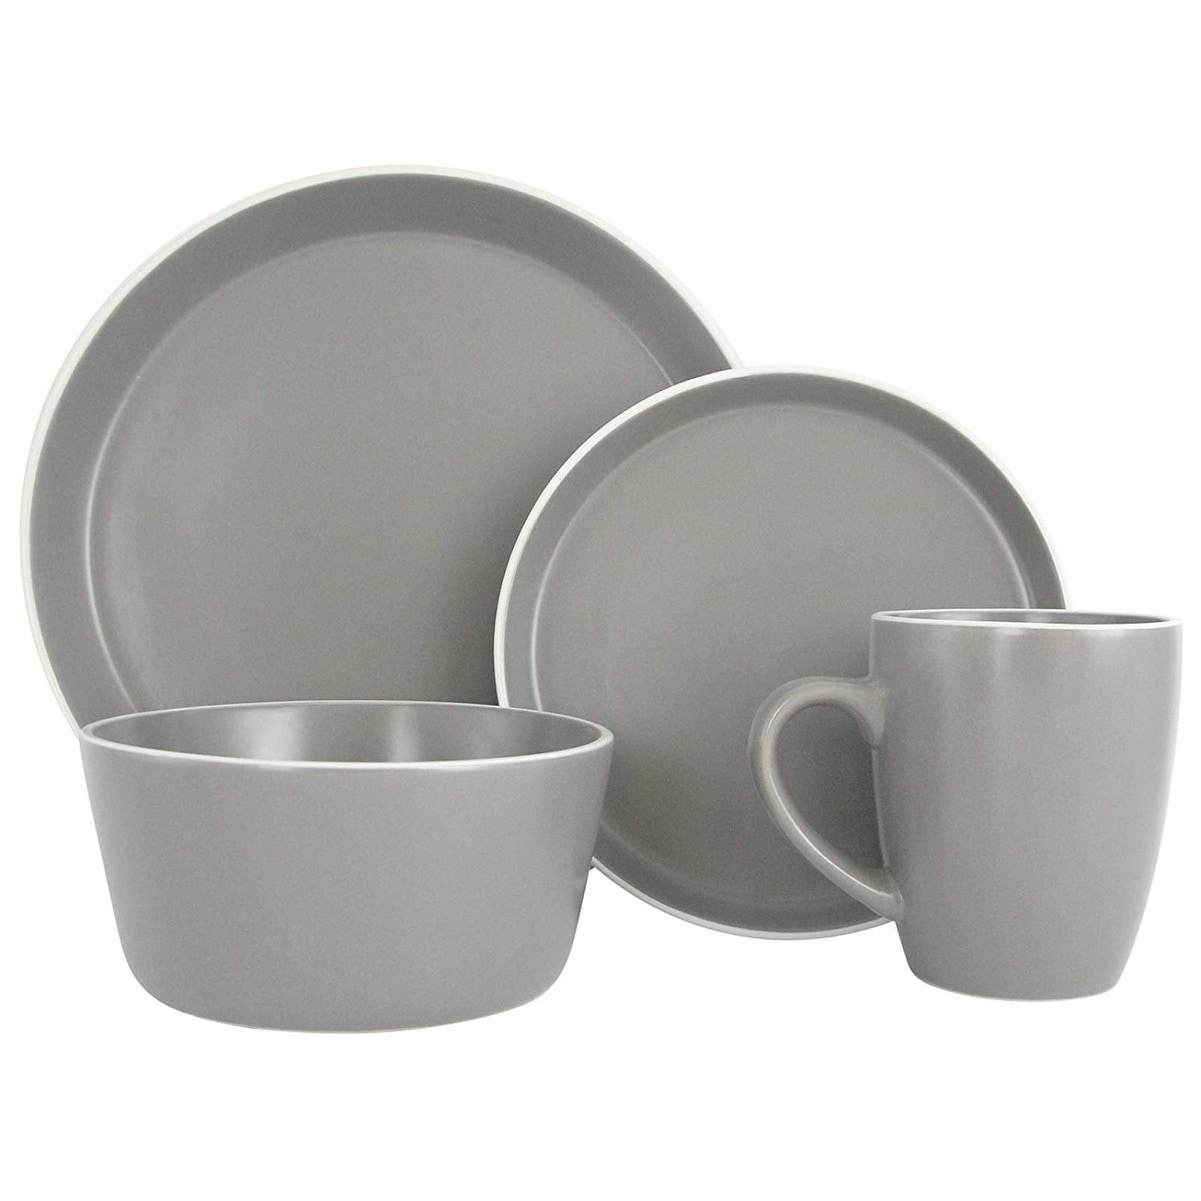 everyday dinnerware sets